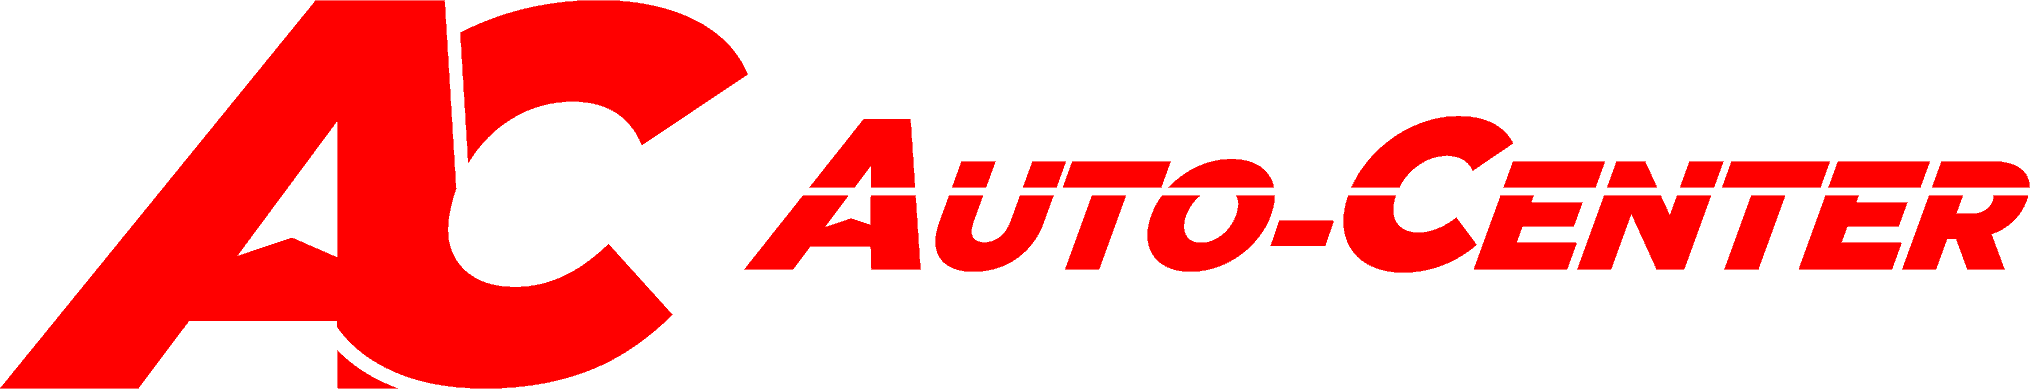 AC Auto-Center logo punainen